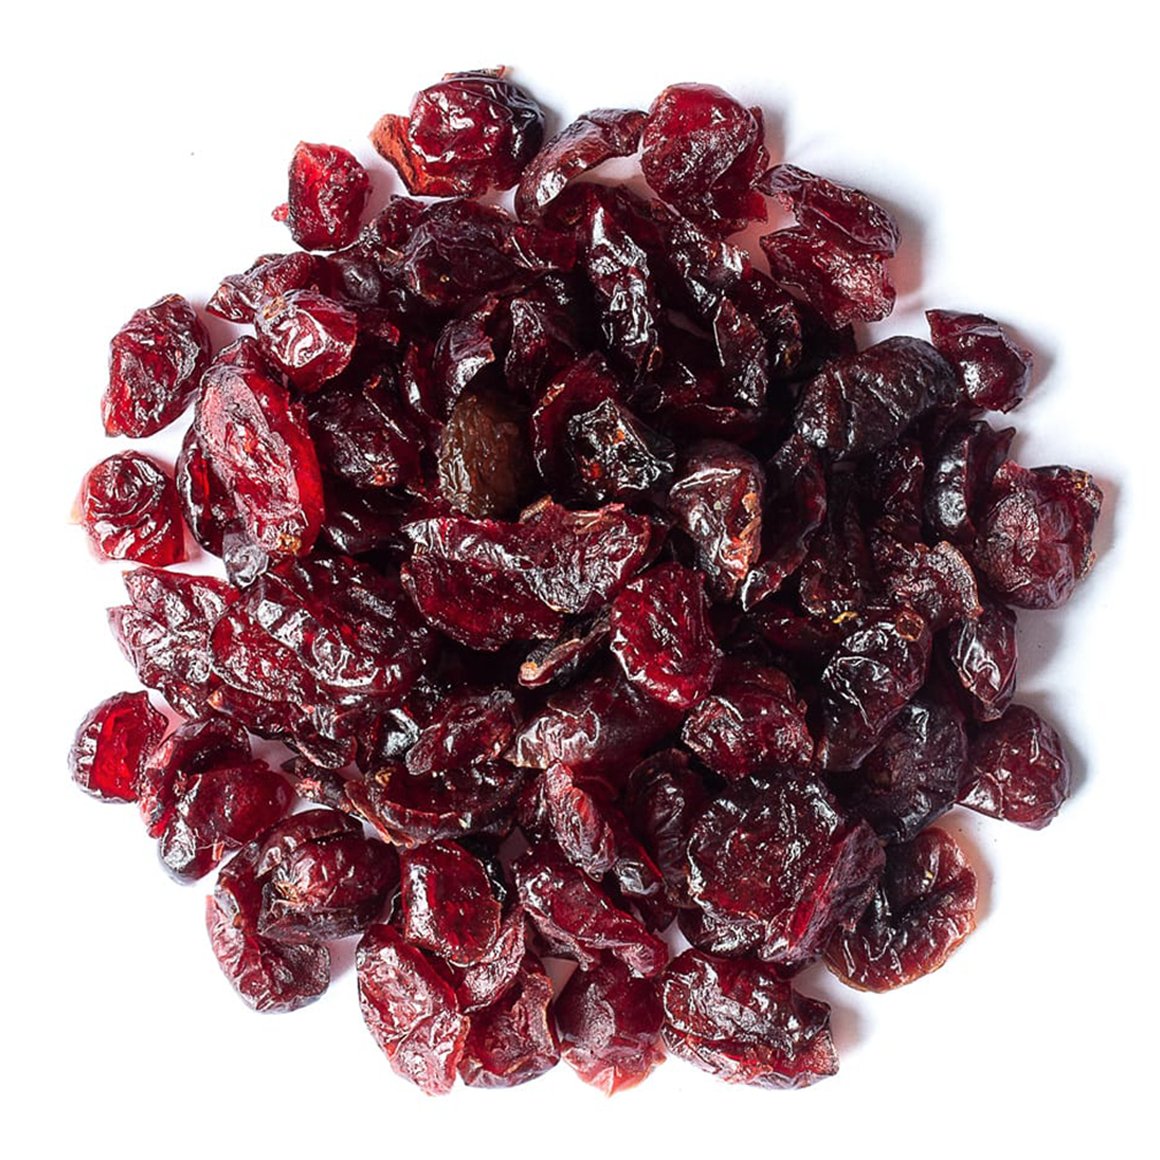 dried-cranberries-main